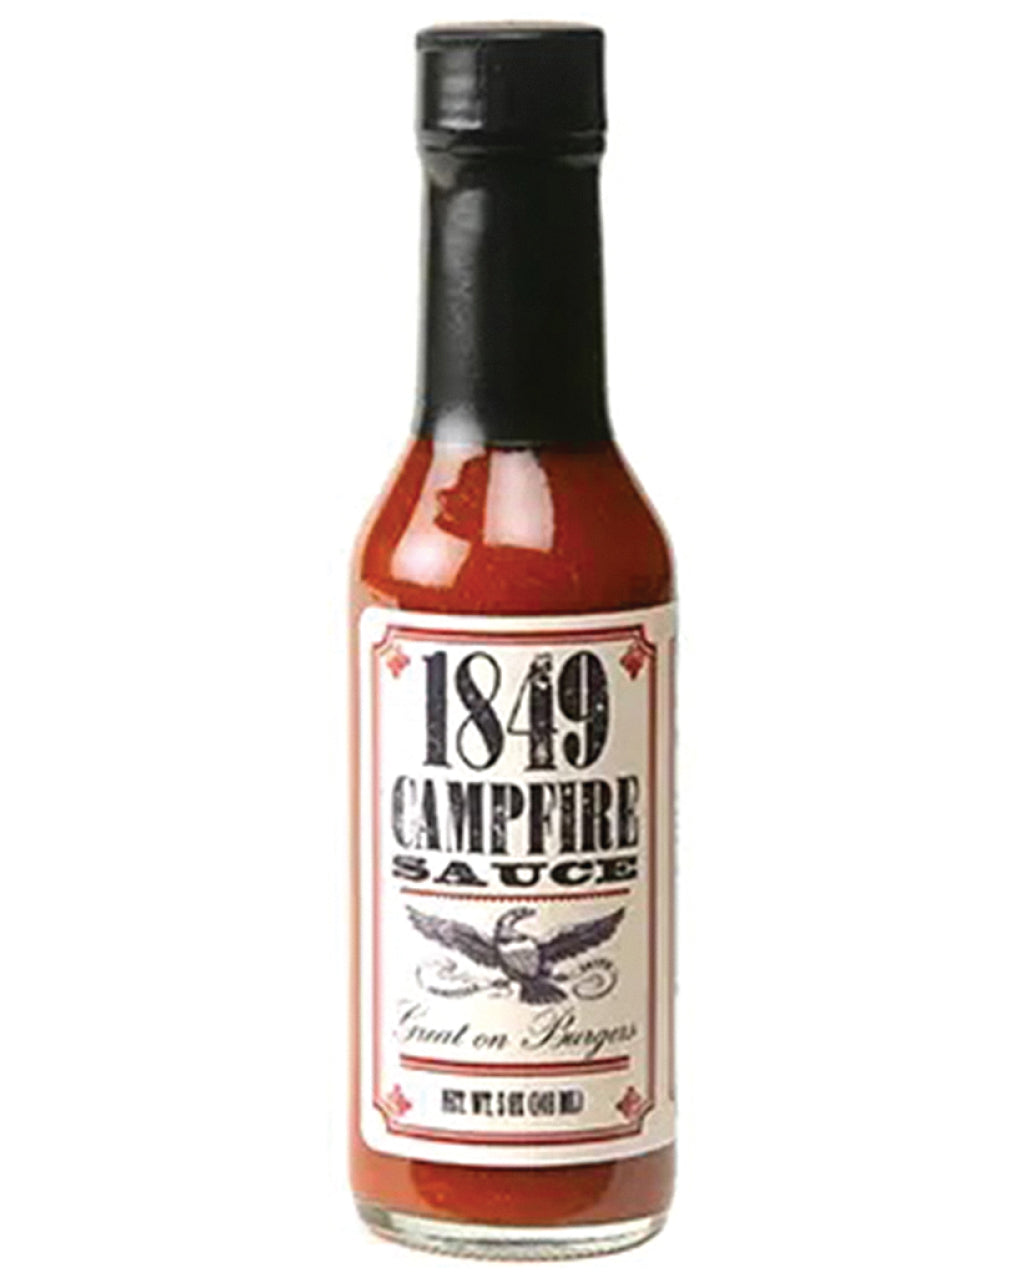 1849 campfire hot sauce